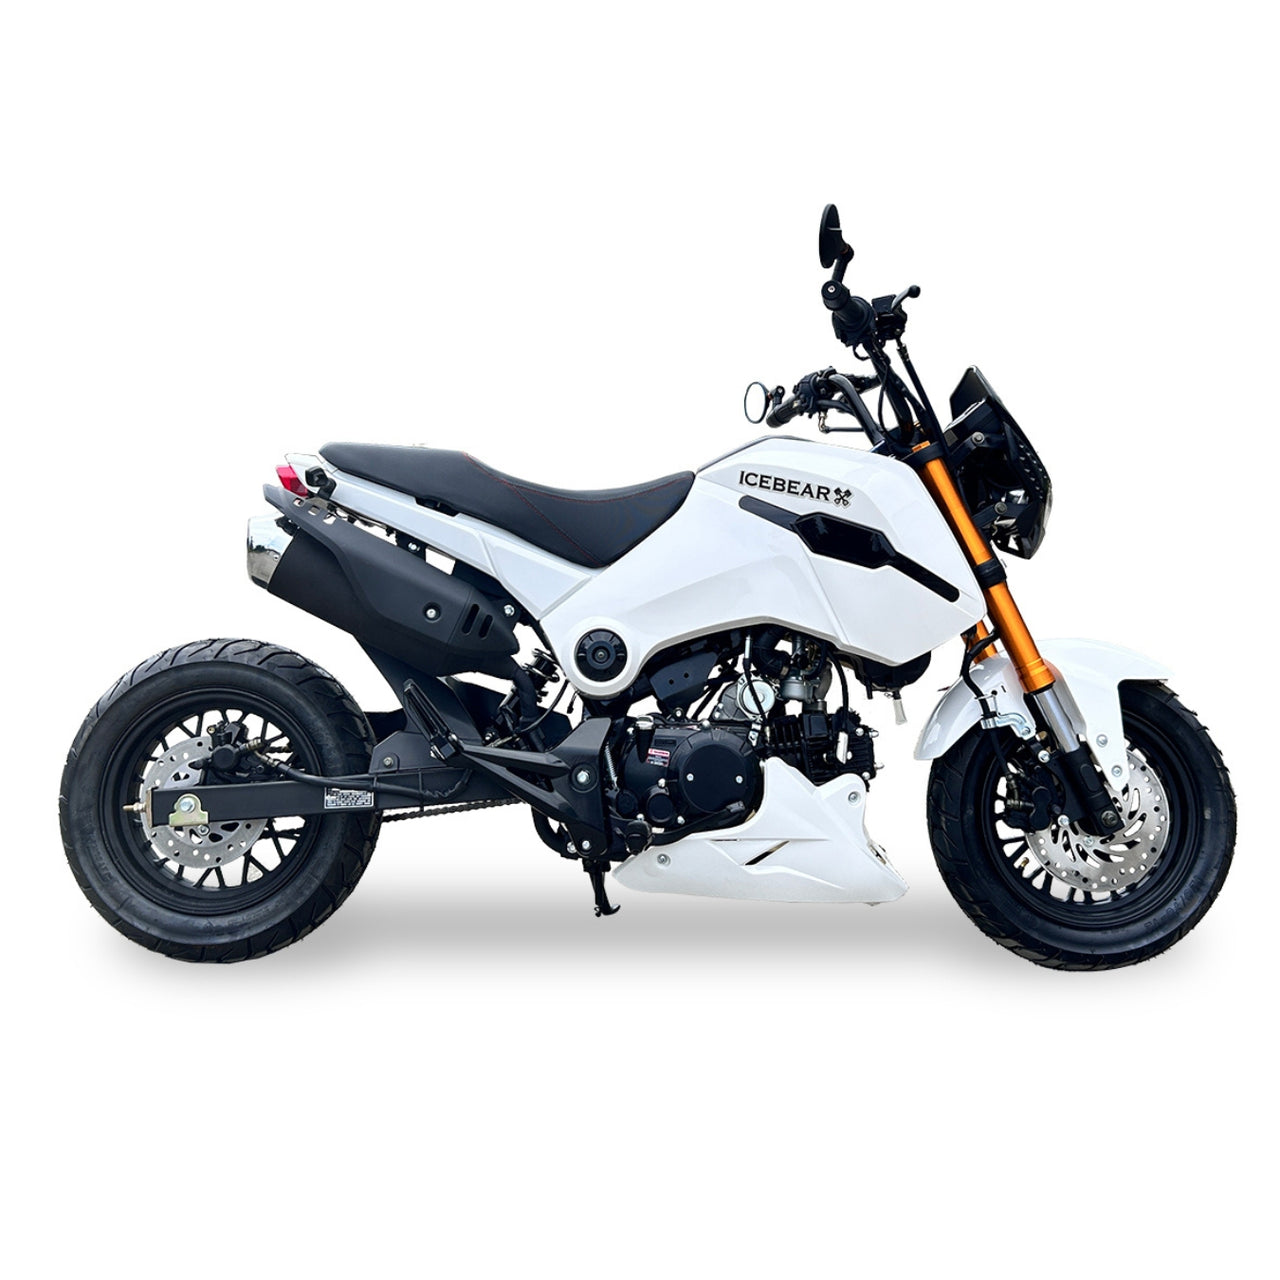 IceBear Fuerza 125cc Motorcycle